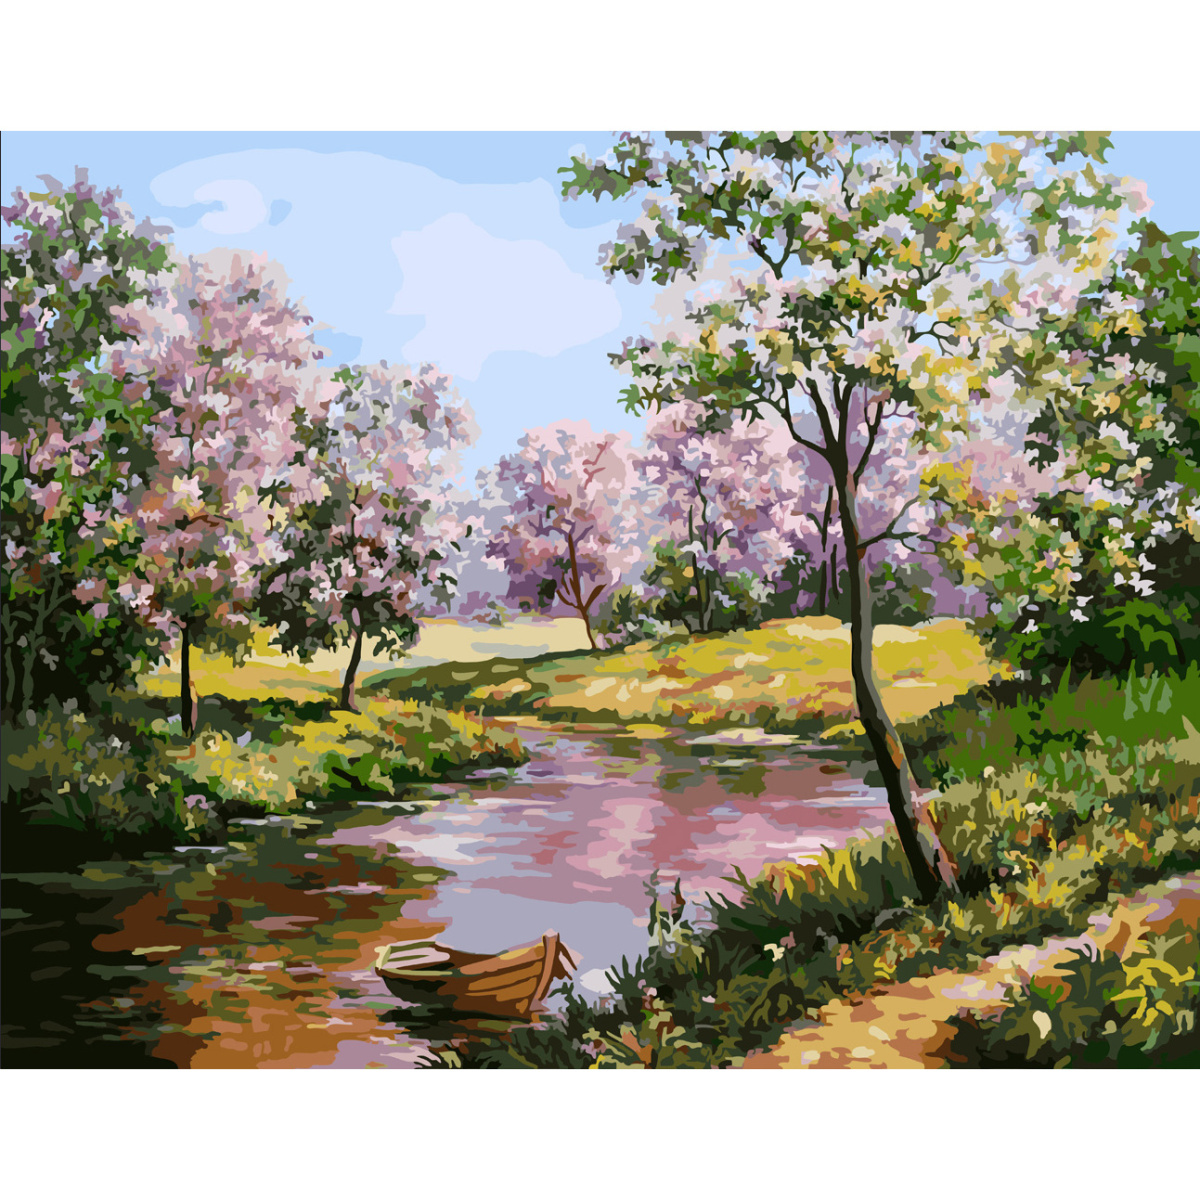 Картина по номерам Strateg Река среди цветущих деревьев с лаком и уровнем 40х50 см SY6610